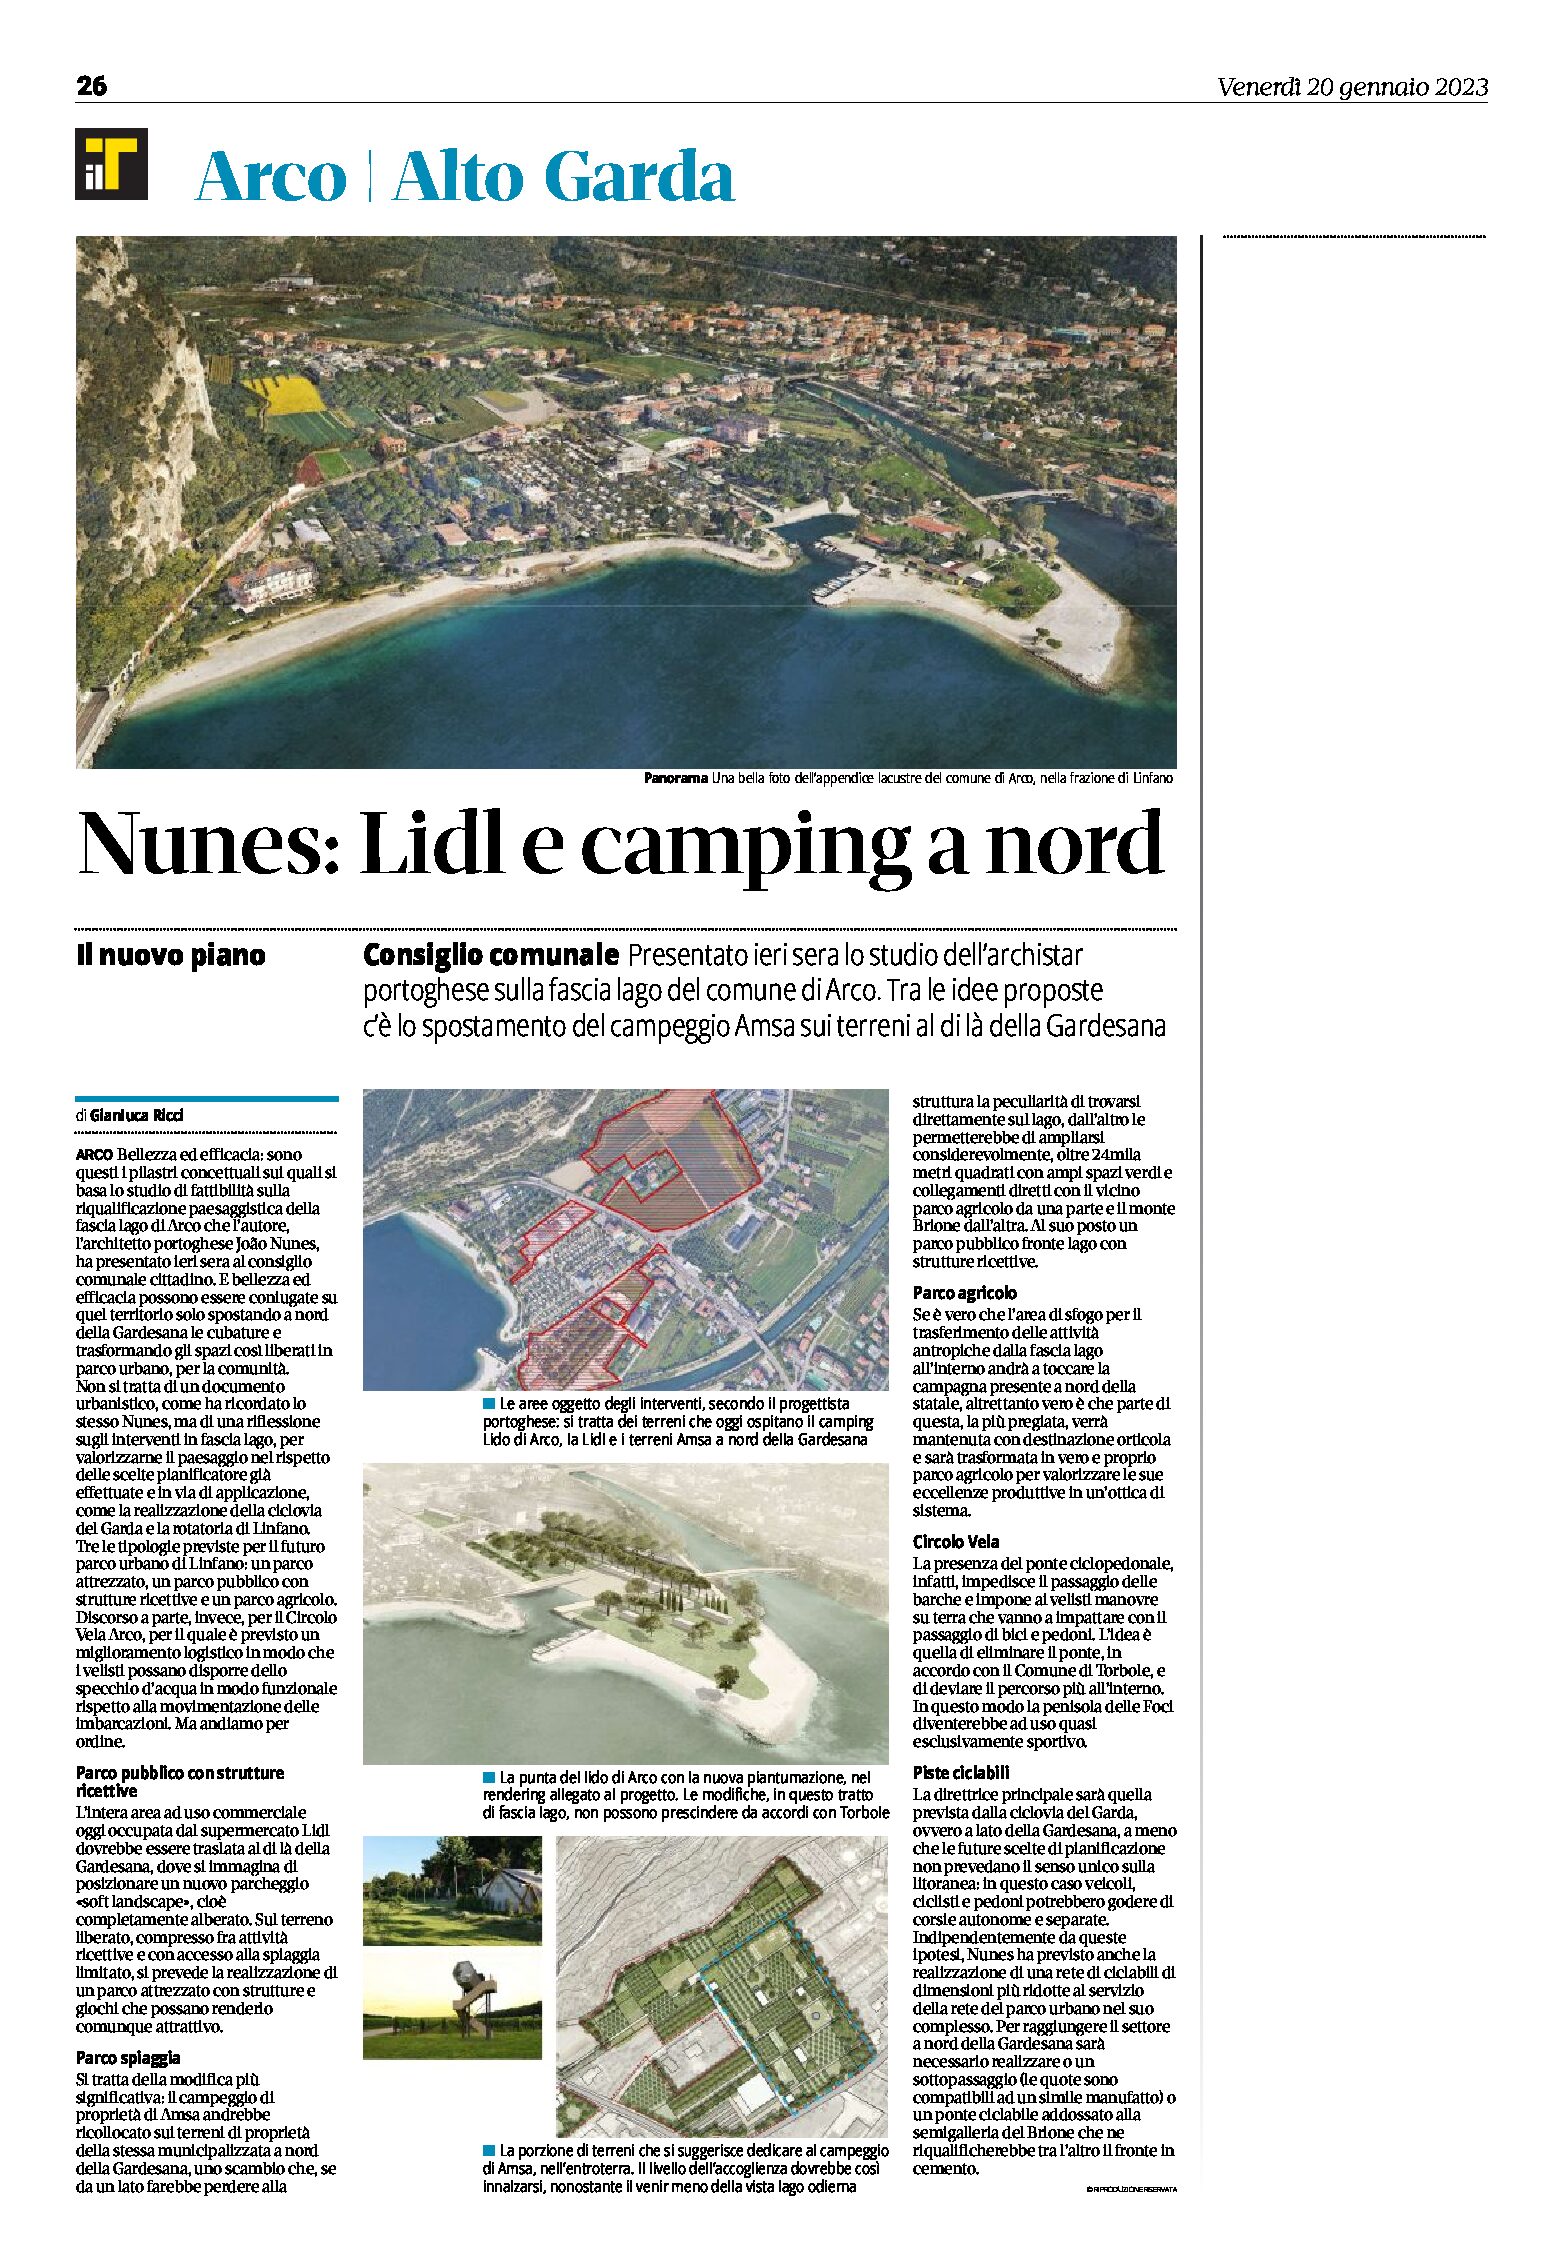 Arco, Nunes: Lidl e camping a nord